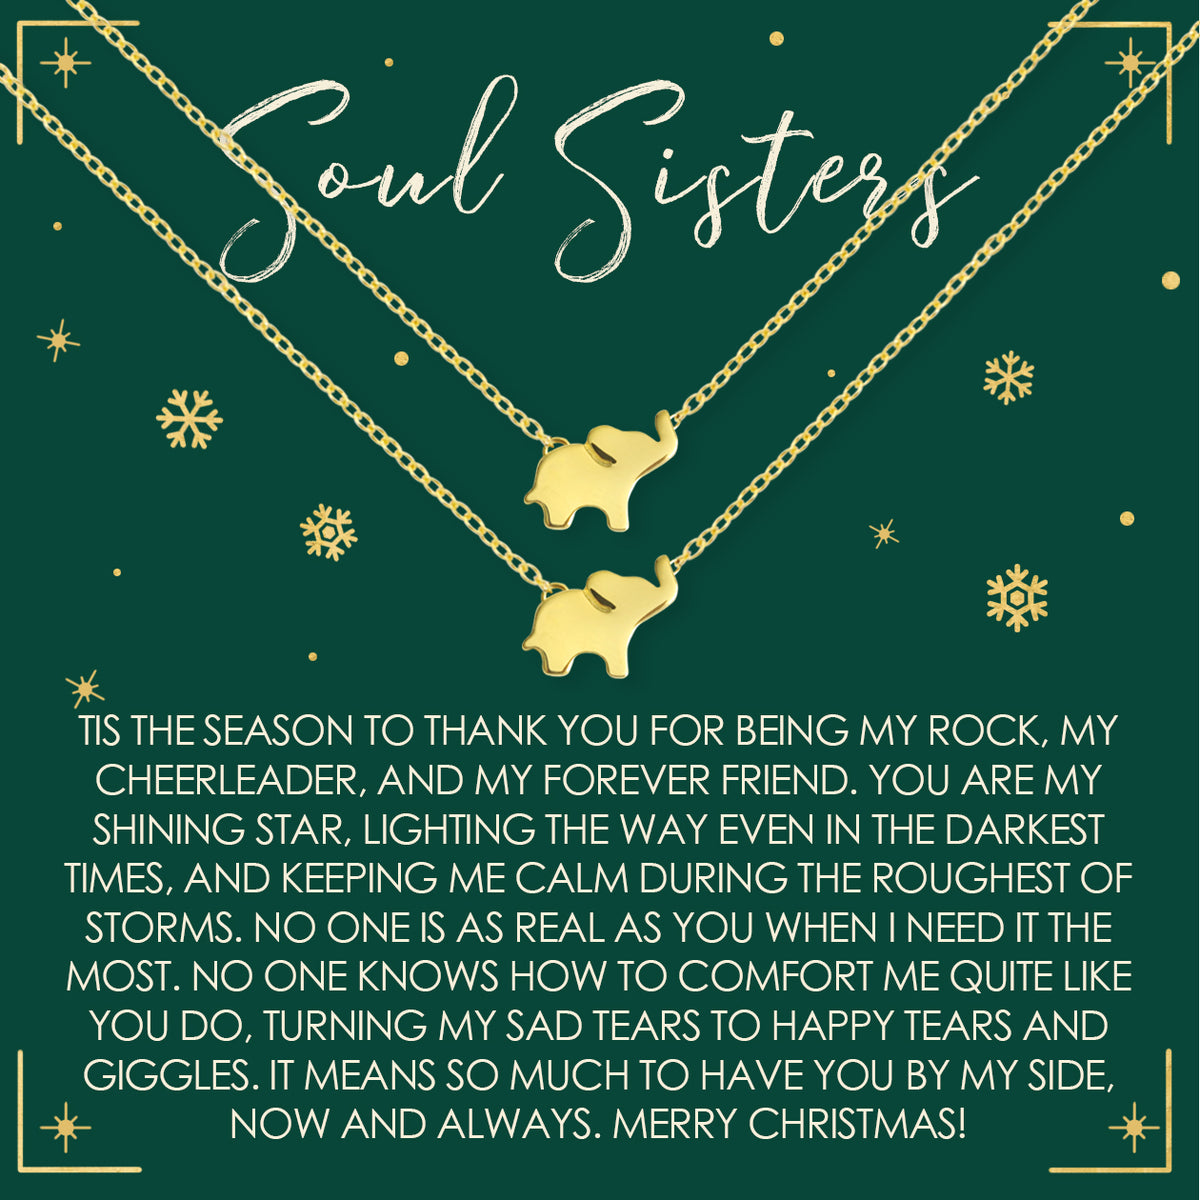 Soul Sisters Christmas Elephant Necklace Set